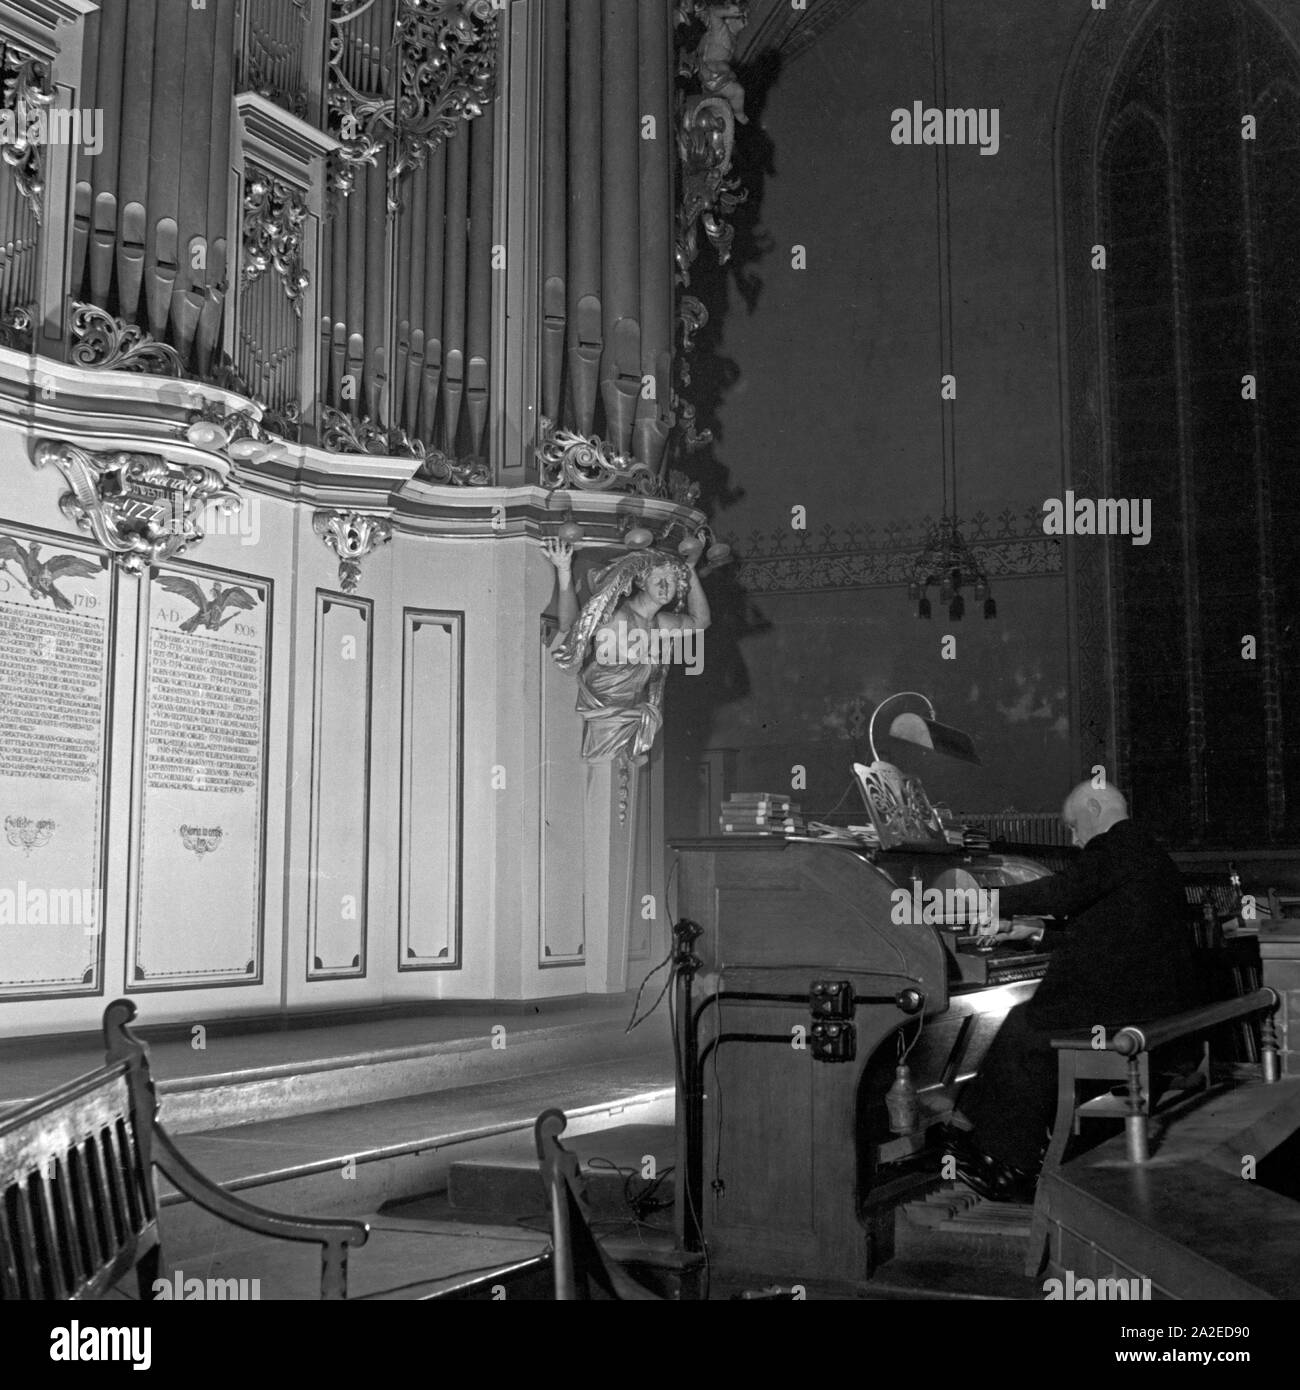 Ein Kantor spielt Orgel in einer Kirche in der Vorweihnachtszeit, 1930er Jahre Deutschland. Un homme jouant de l'orgue dans une église de la période de Noël, l'Allemagne des années 1930. Banque D'Images